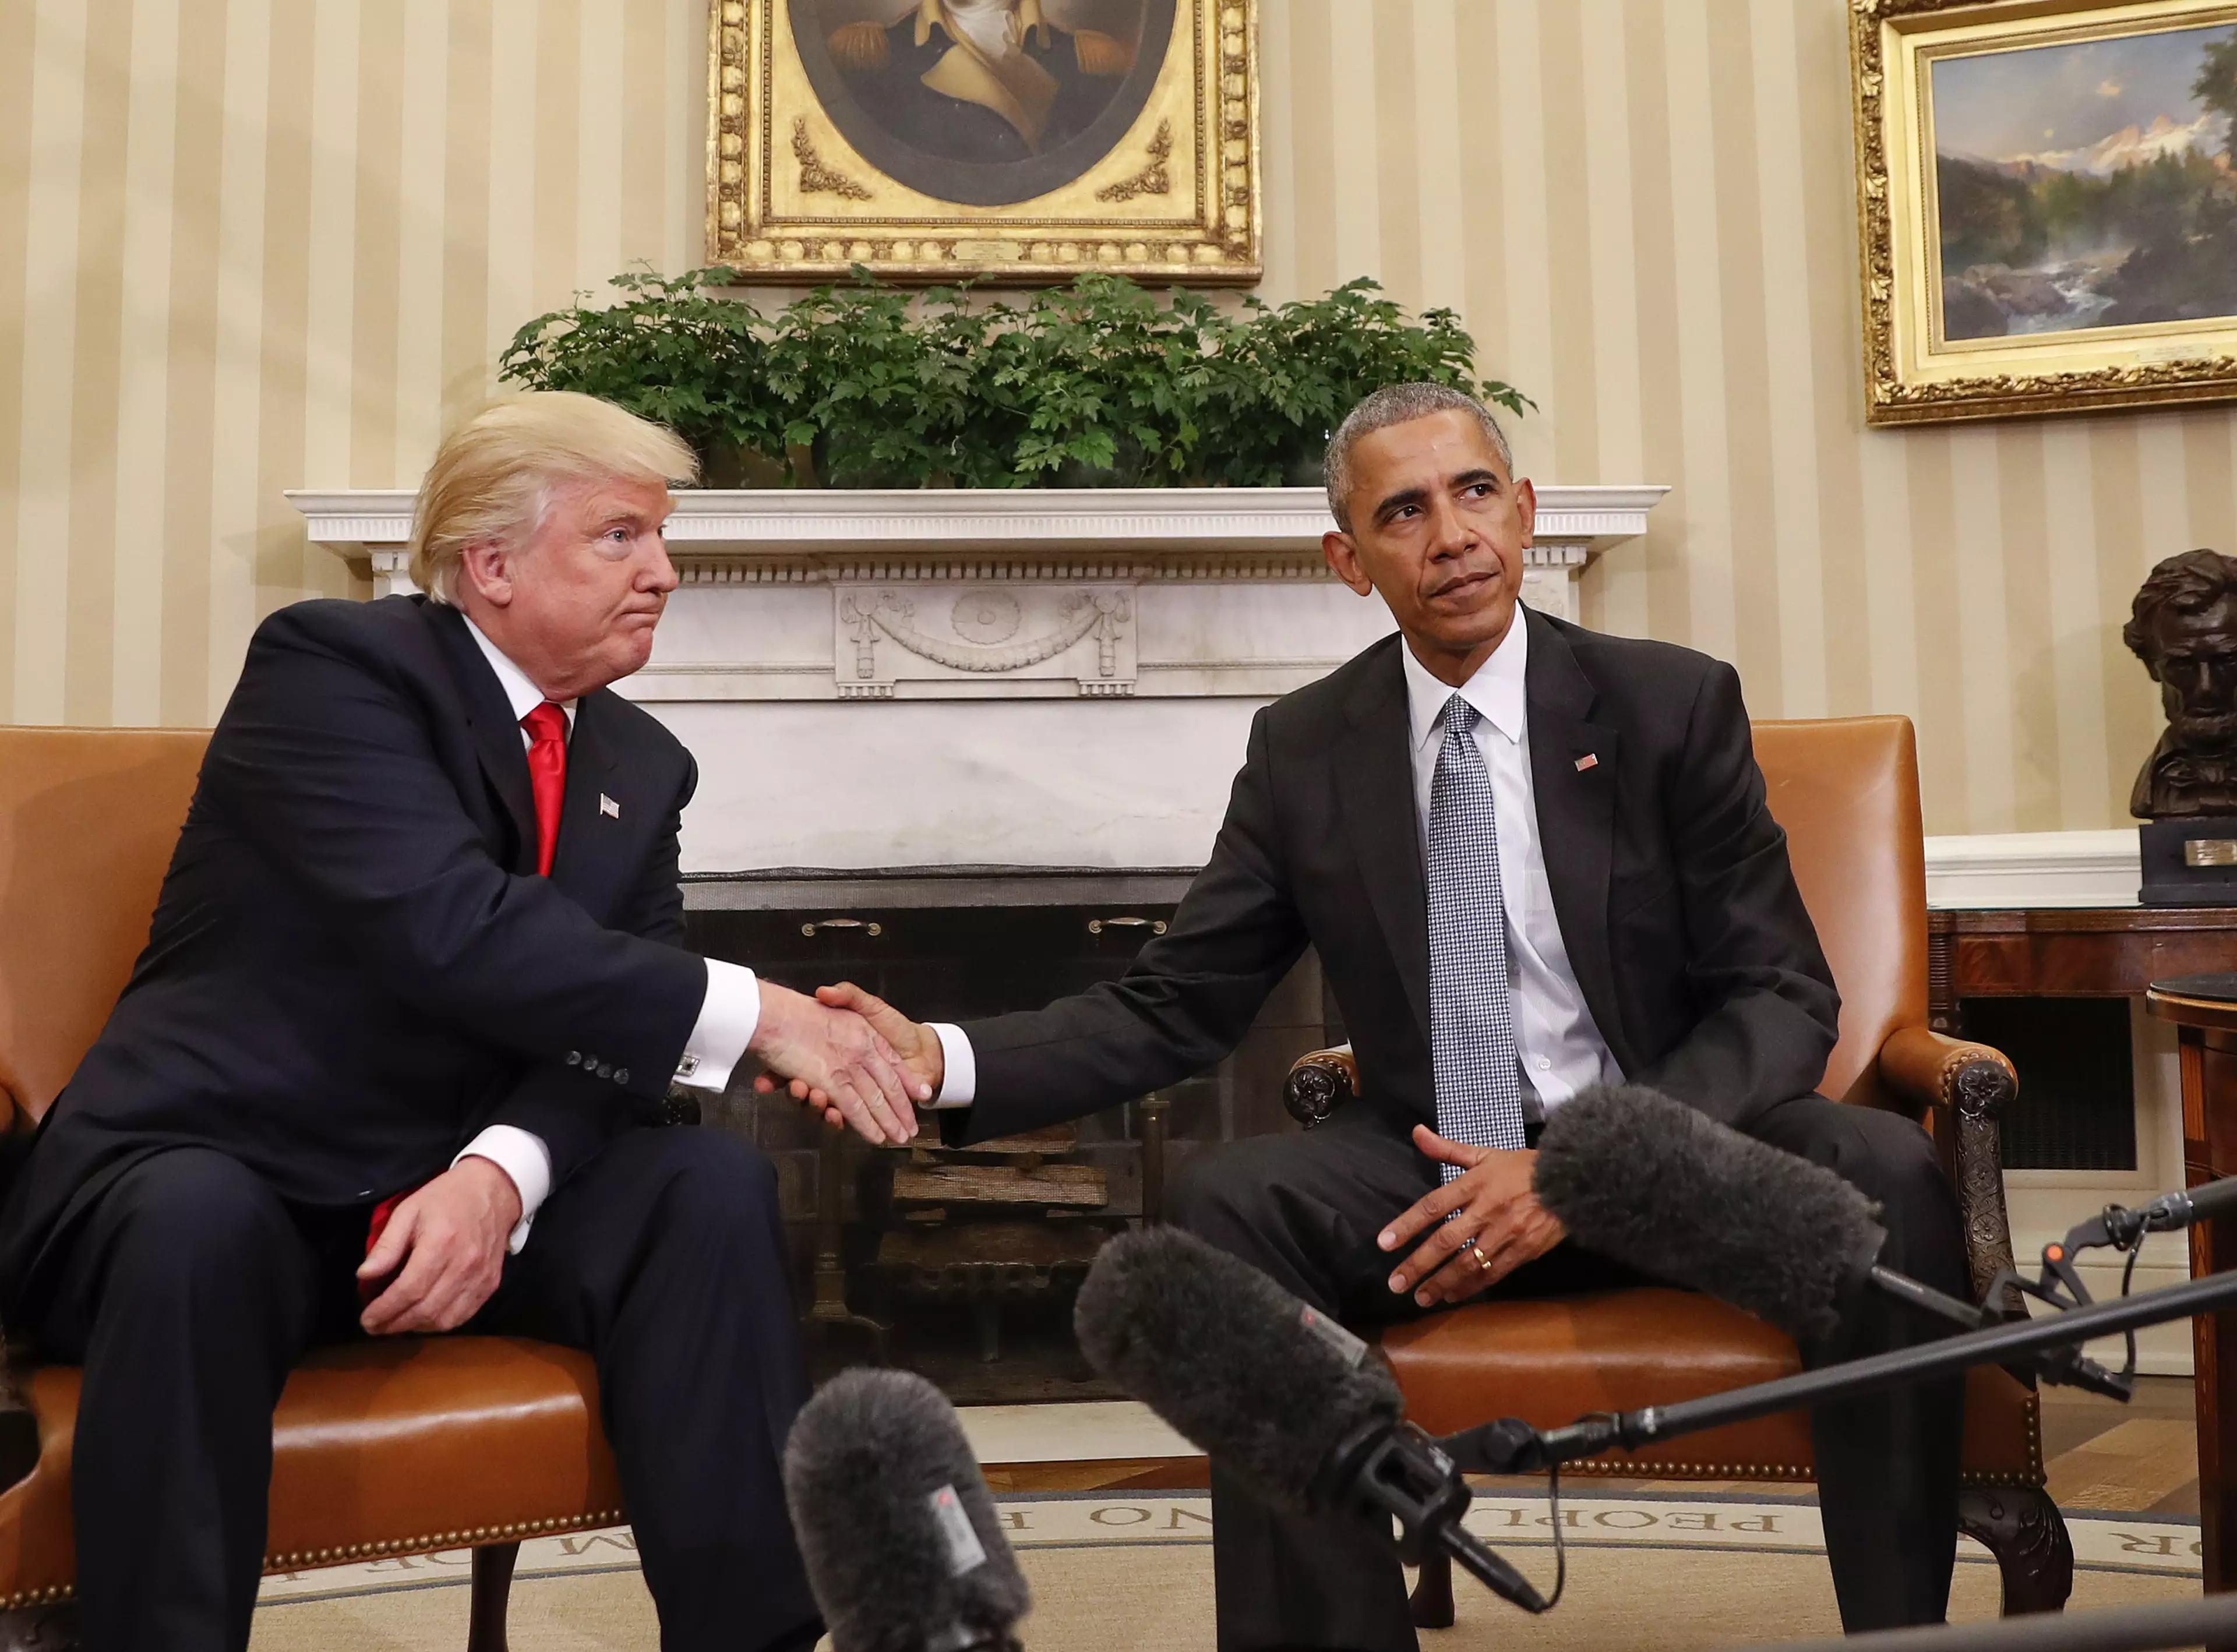 Of Course Donald Trump And Barack Obama Got The Photoshop Battle Treatment